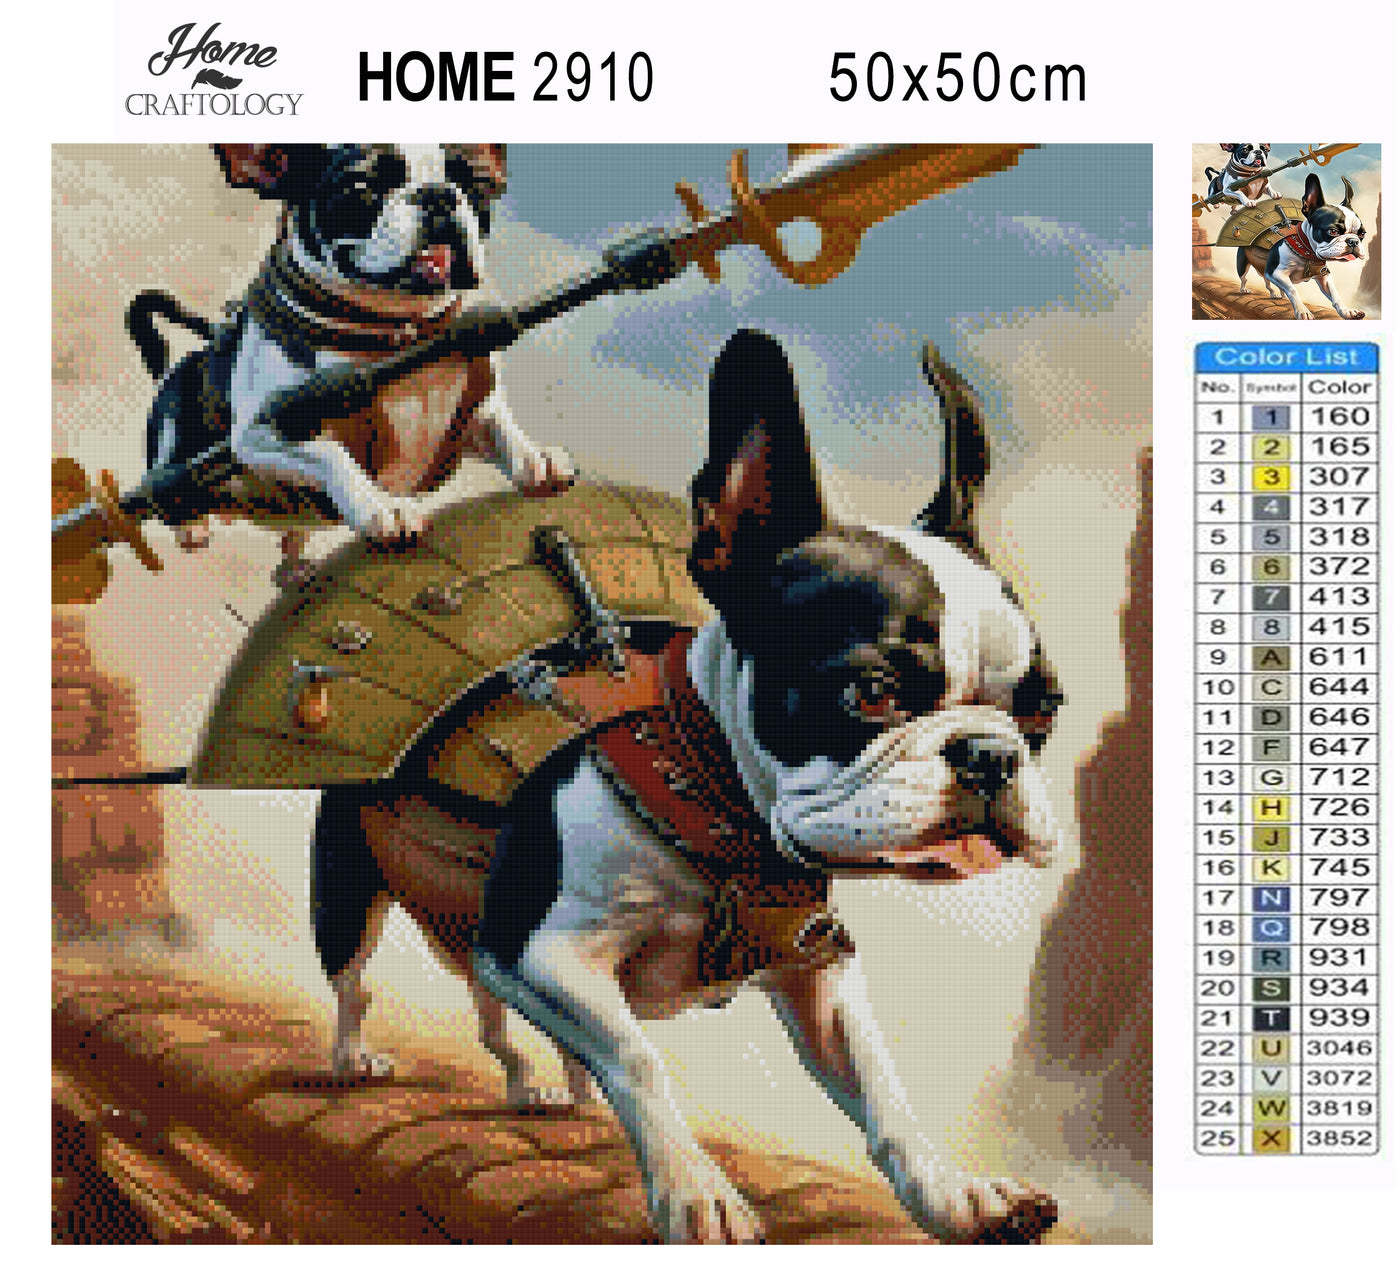 Dogs Ready for Battle - Premium Diamond Painting Kit